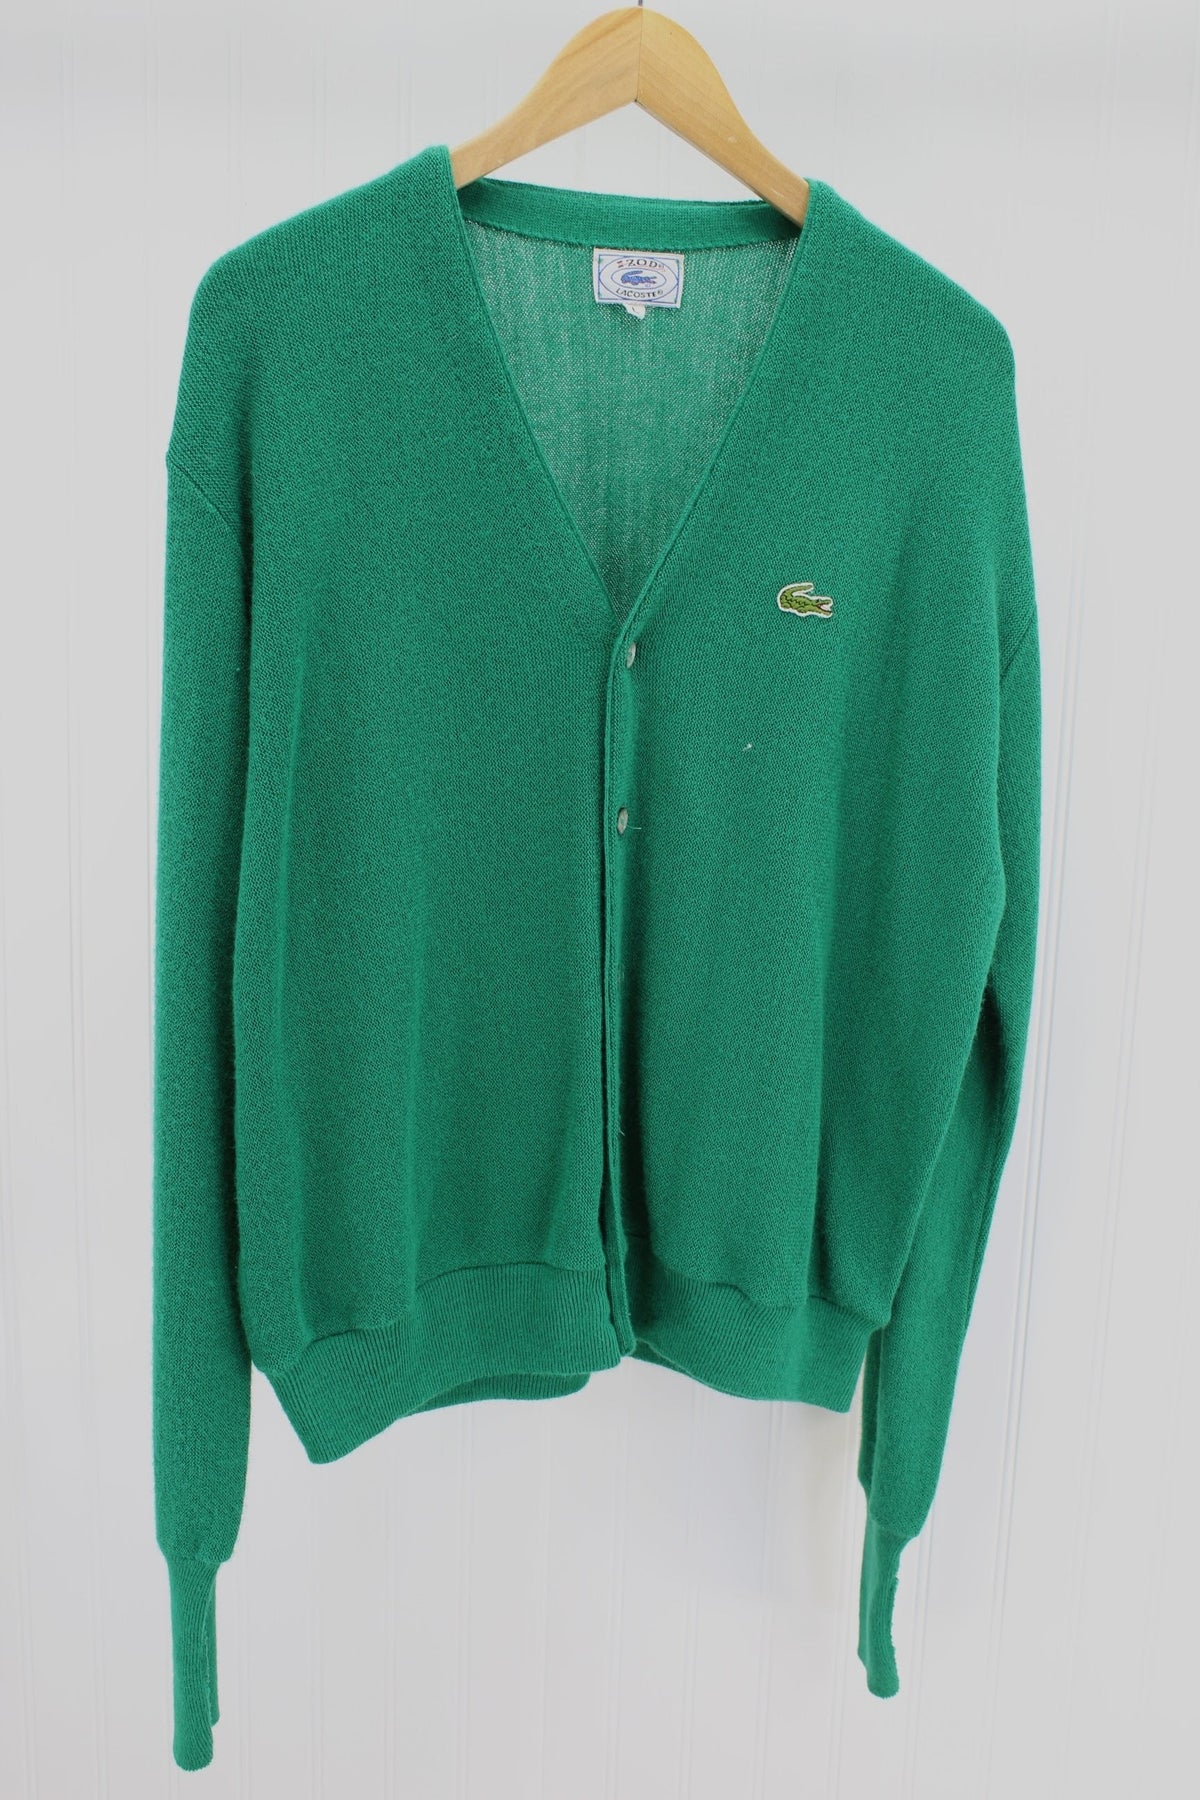 IZOD Lacoste Cardigan Sweater - Vintage 